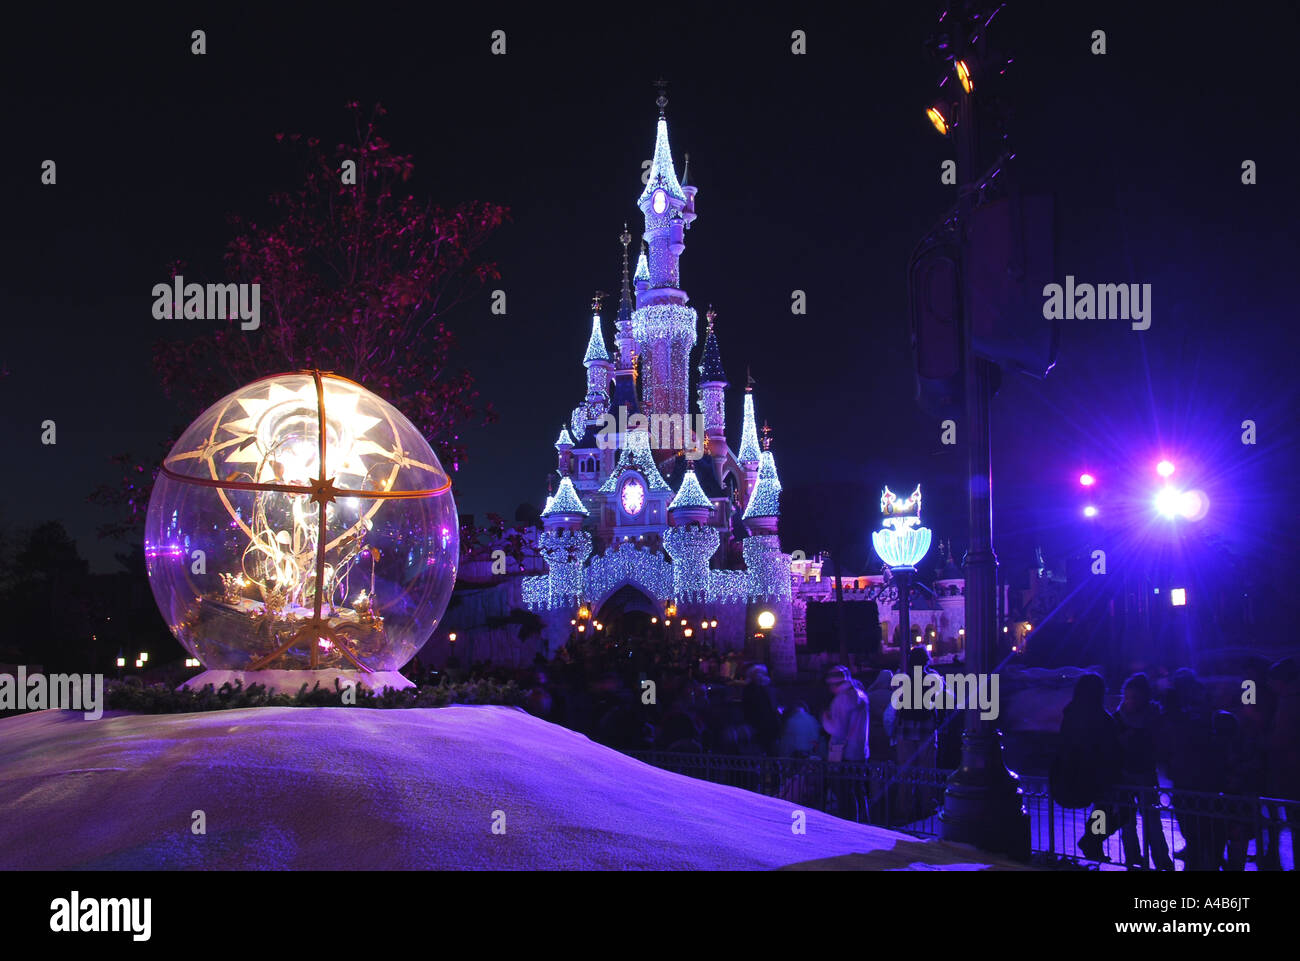 Christmas lights illuminate the Fairy tale castle at Disneyland in Paris. Stock Photo